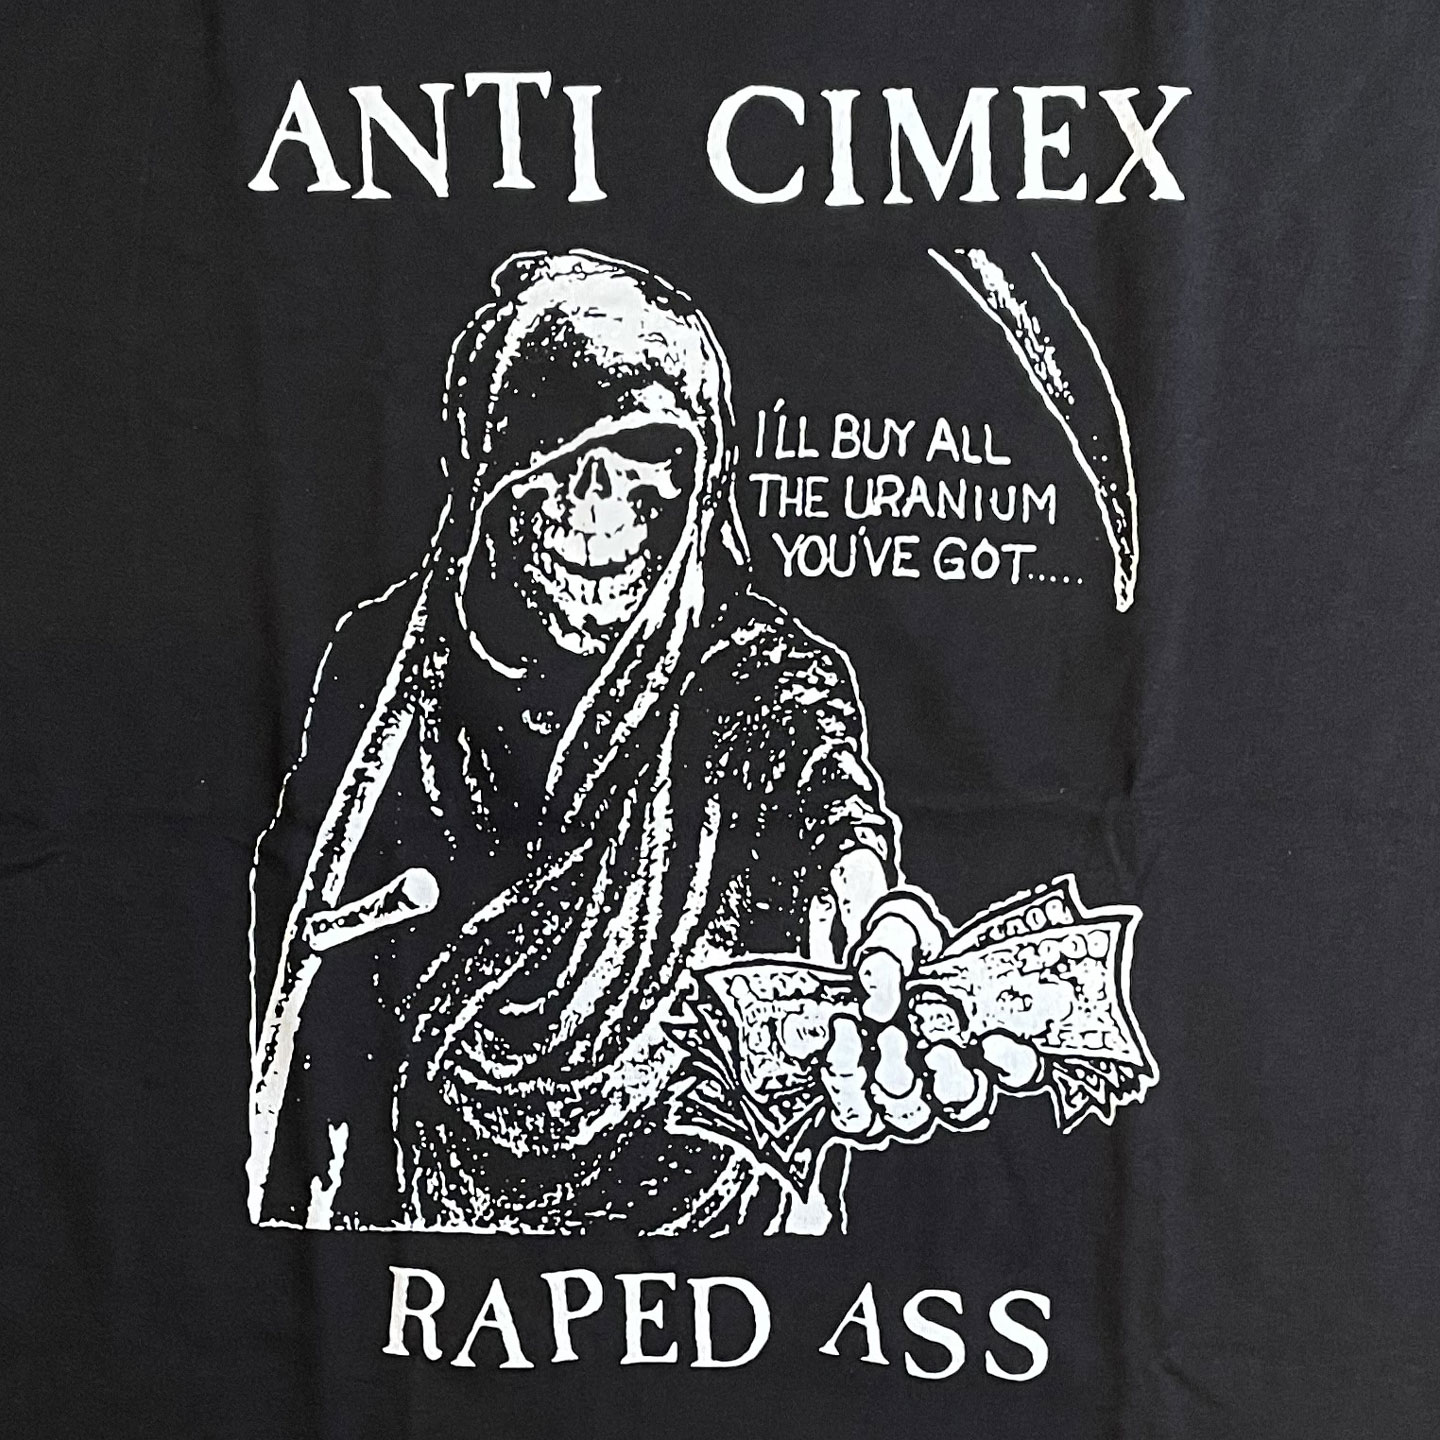 ANTI CIMEX Tシャツ RAPED ASS 2SIDE PRINT